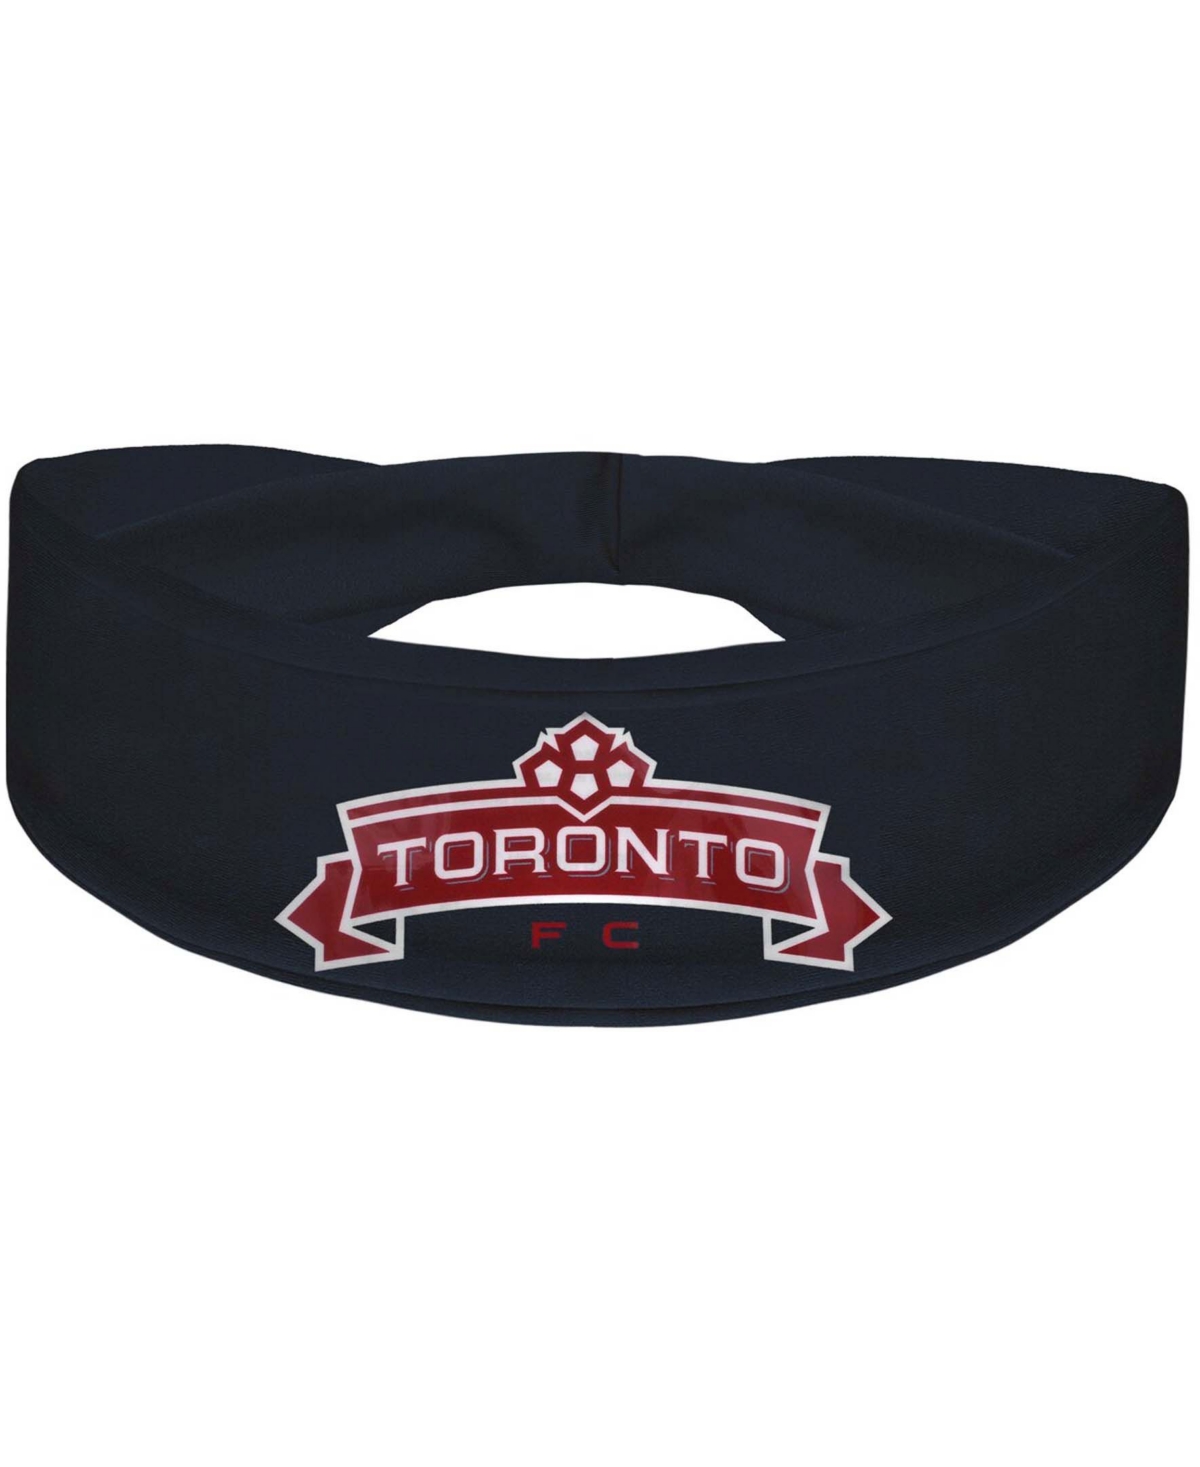 Gray Toronto Fc Alternate Logo Cooling Headband - Gray